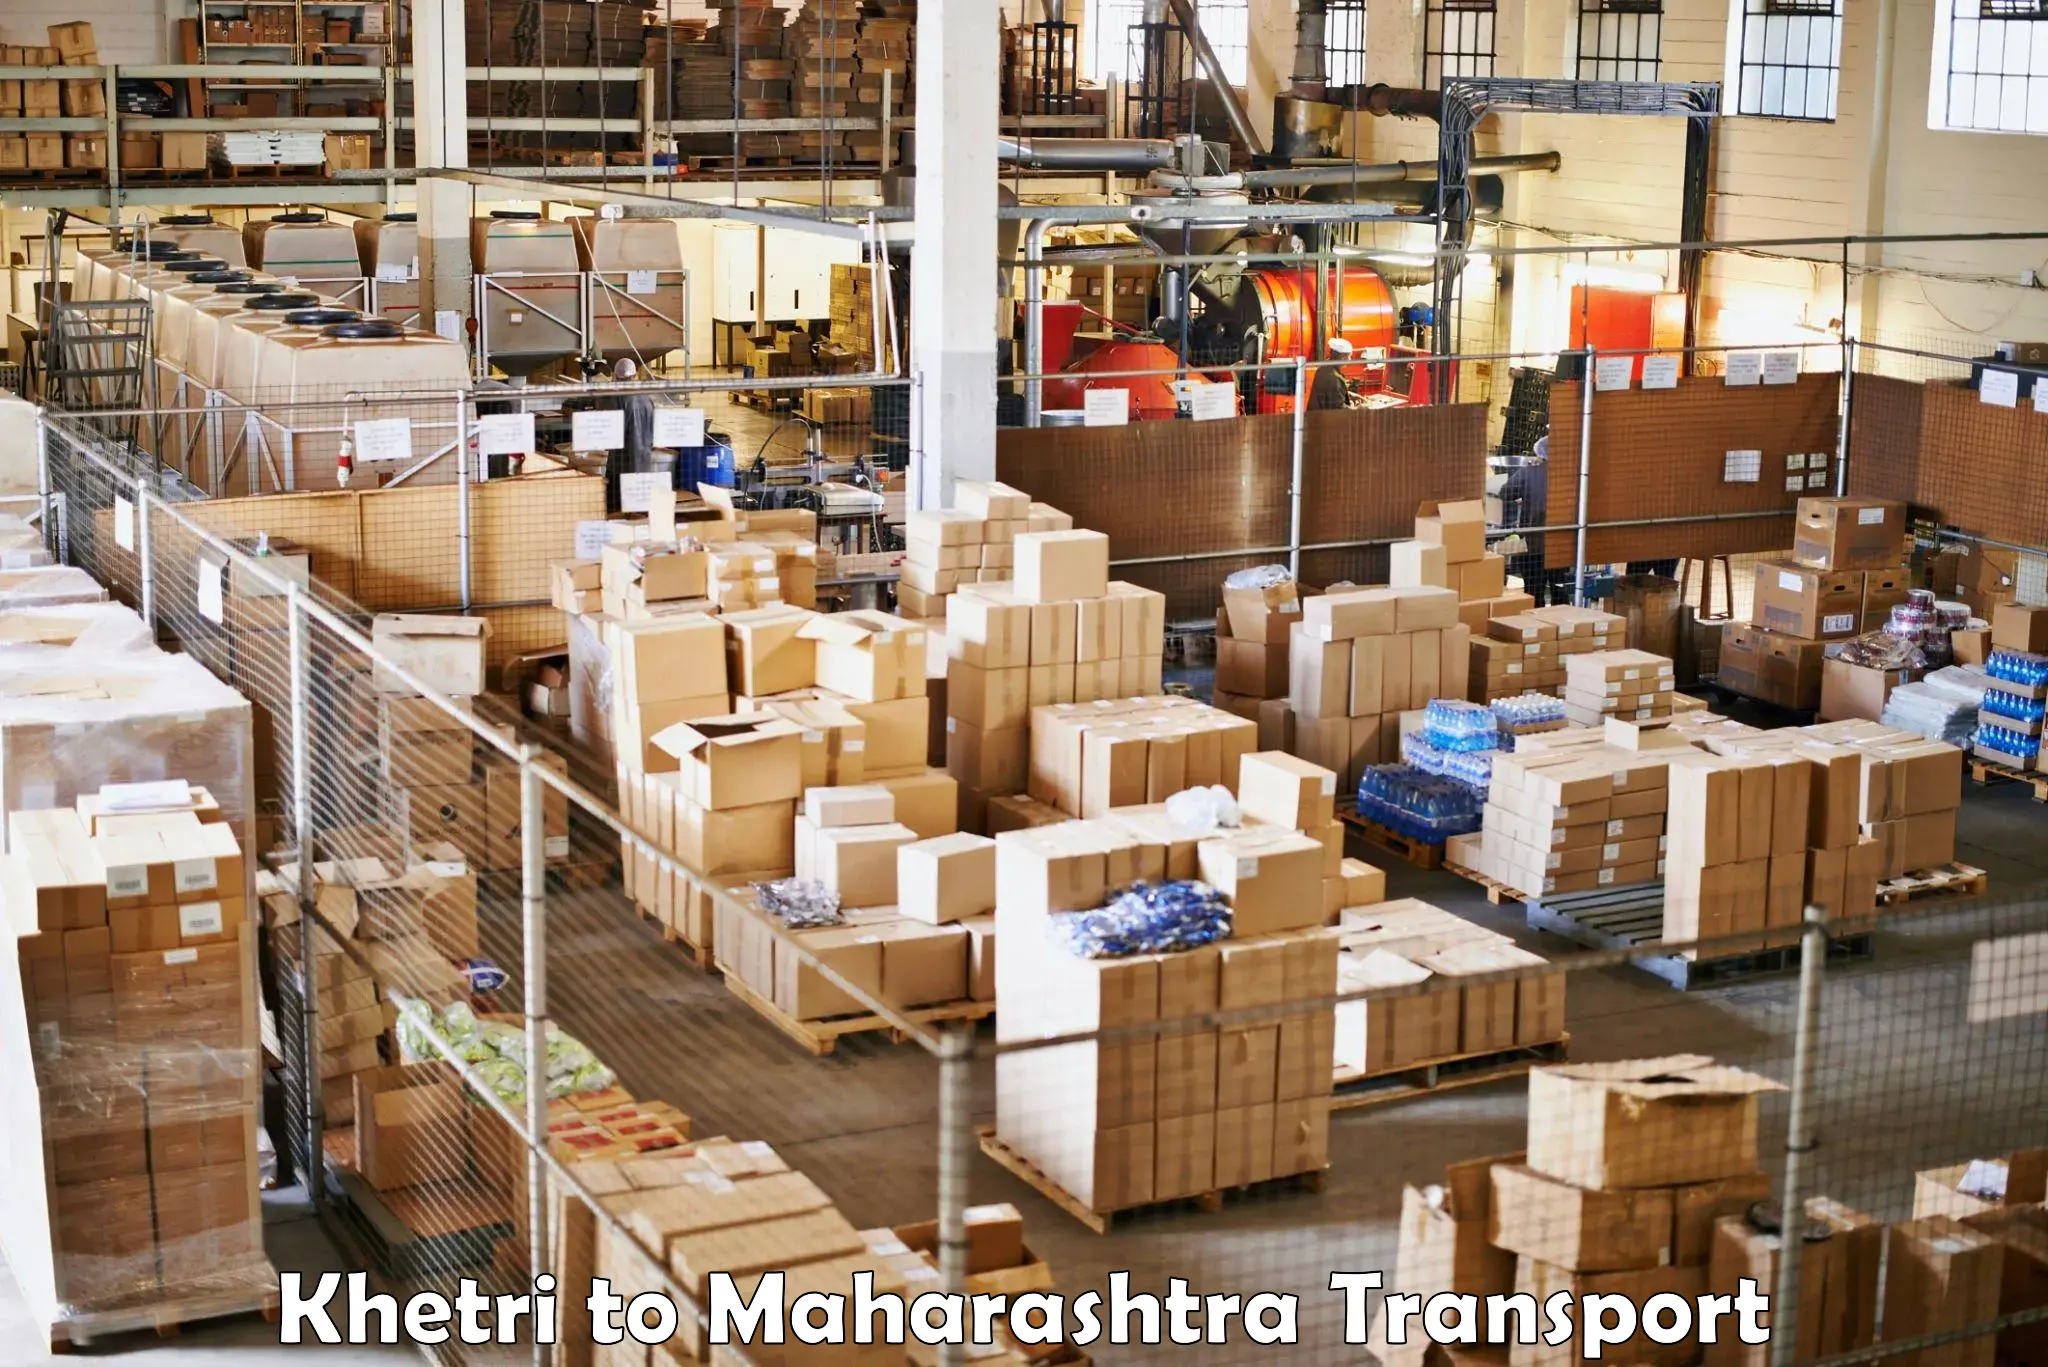 Truck transport companies in India Khetri to Mumbai University